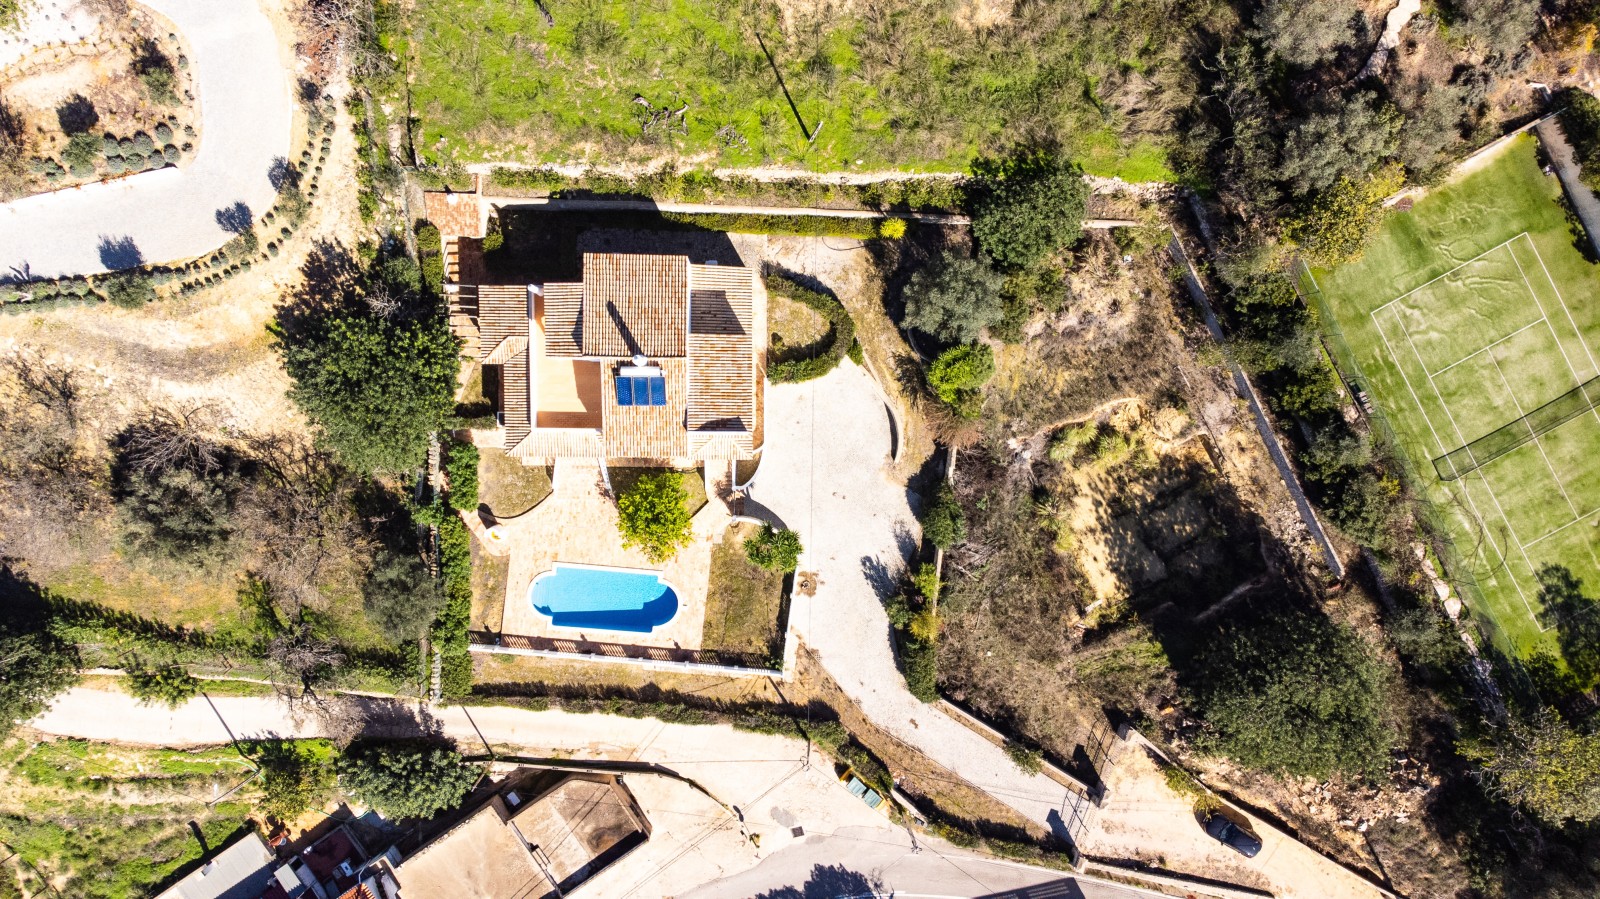 4-Bedroom Villa with swimming pool, for sale in Boliqueime, Loulé, Algarve_267415